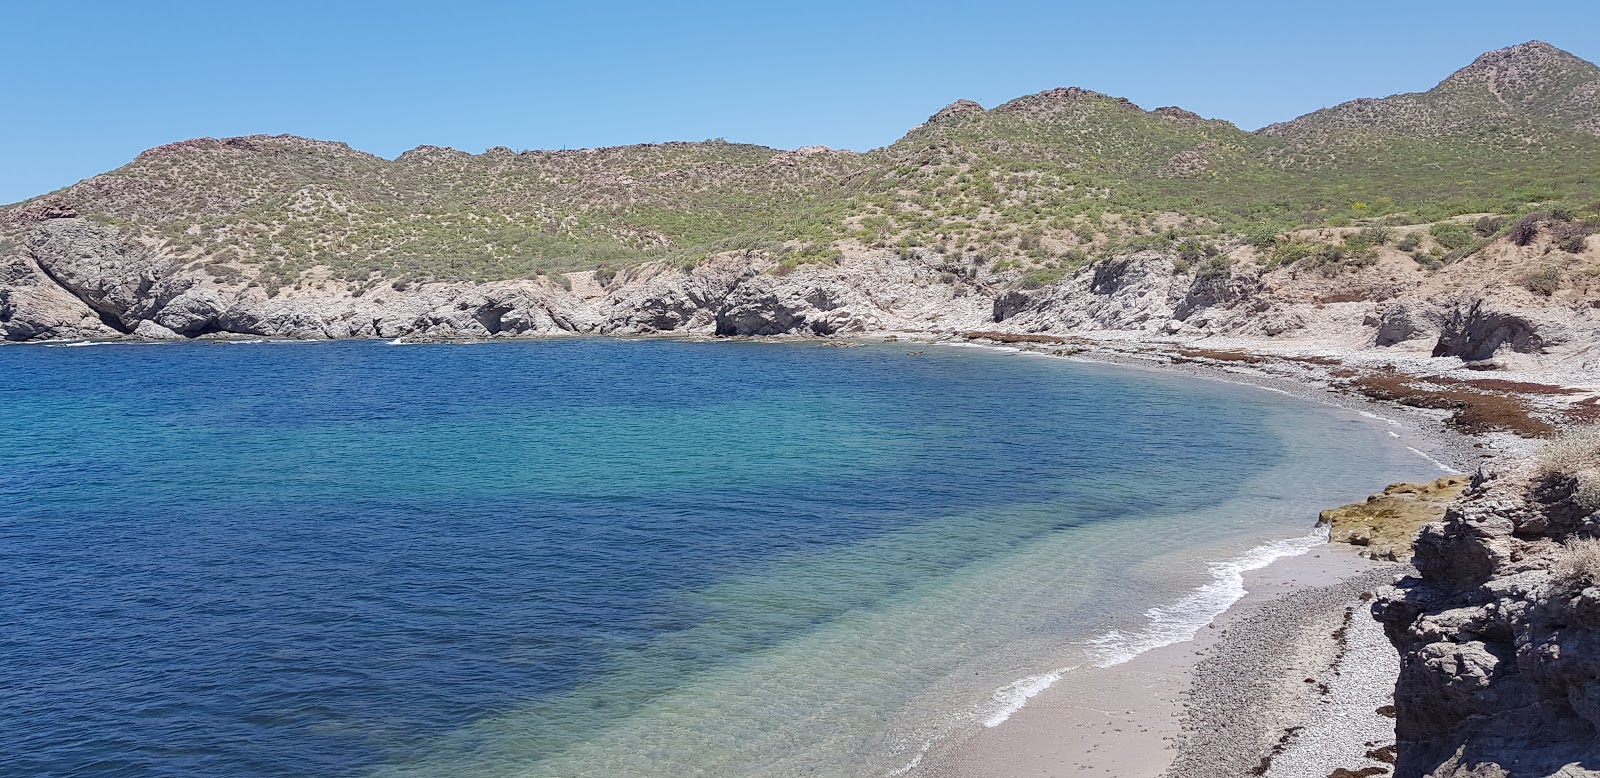 Fotografija El Choyudito beach z sivi kamenček površino